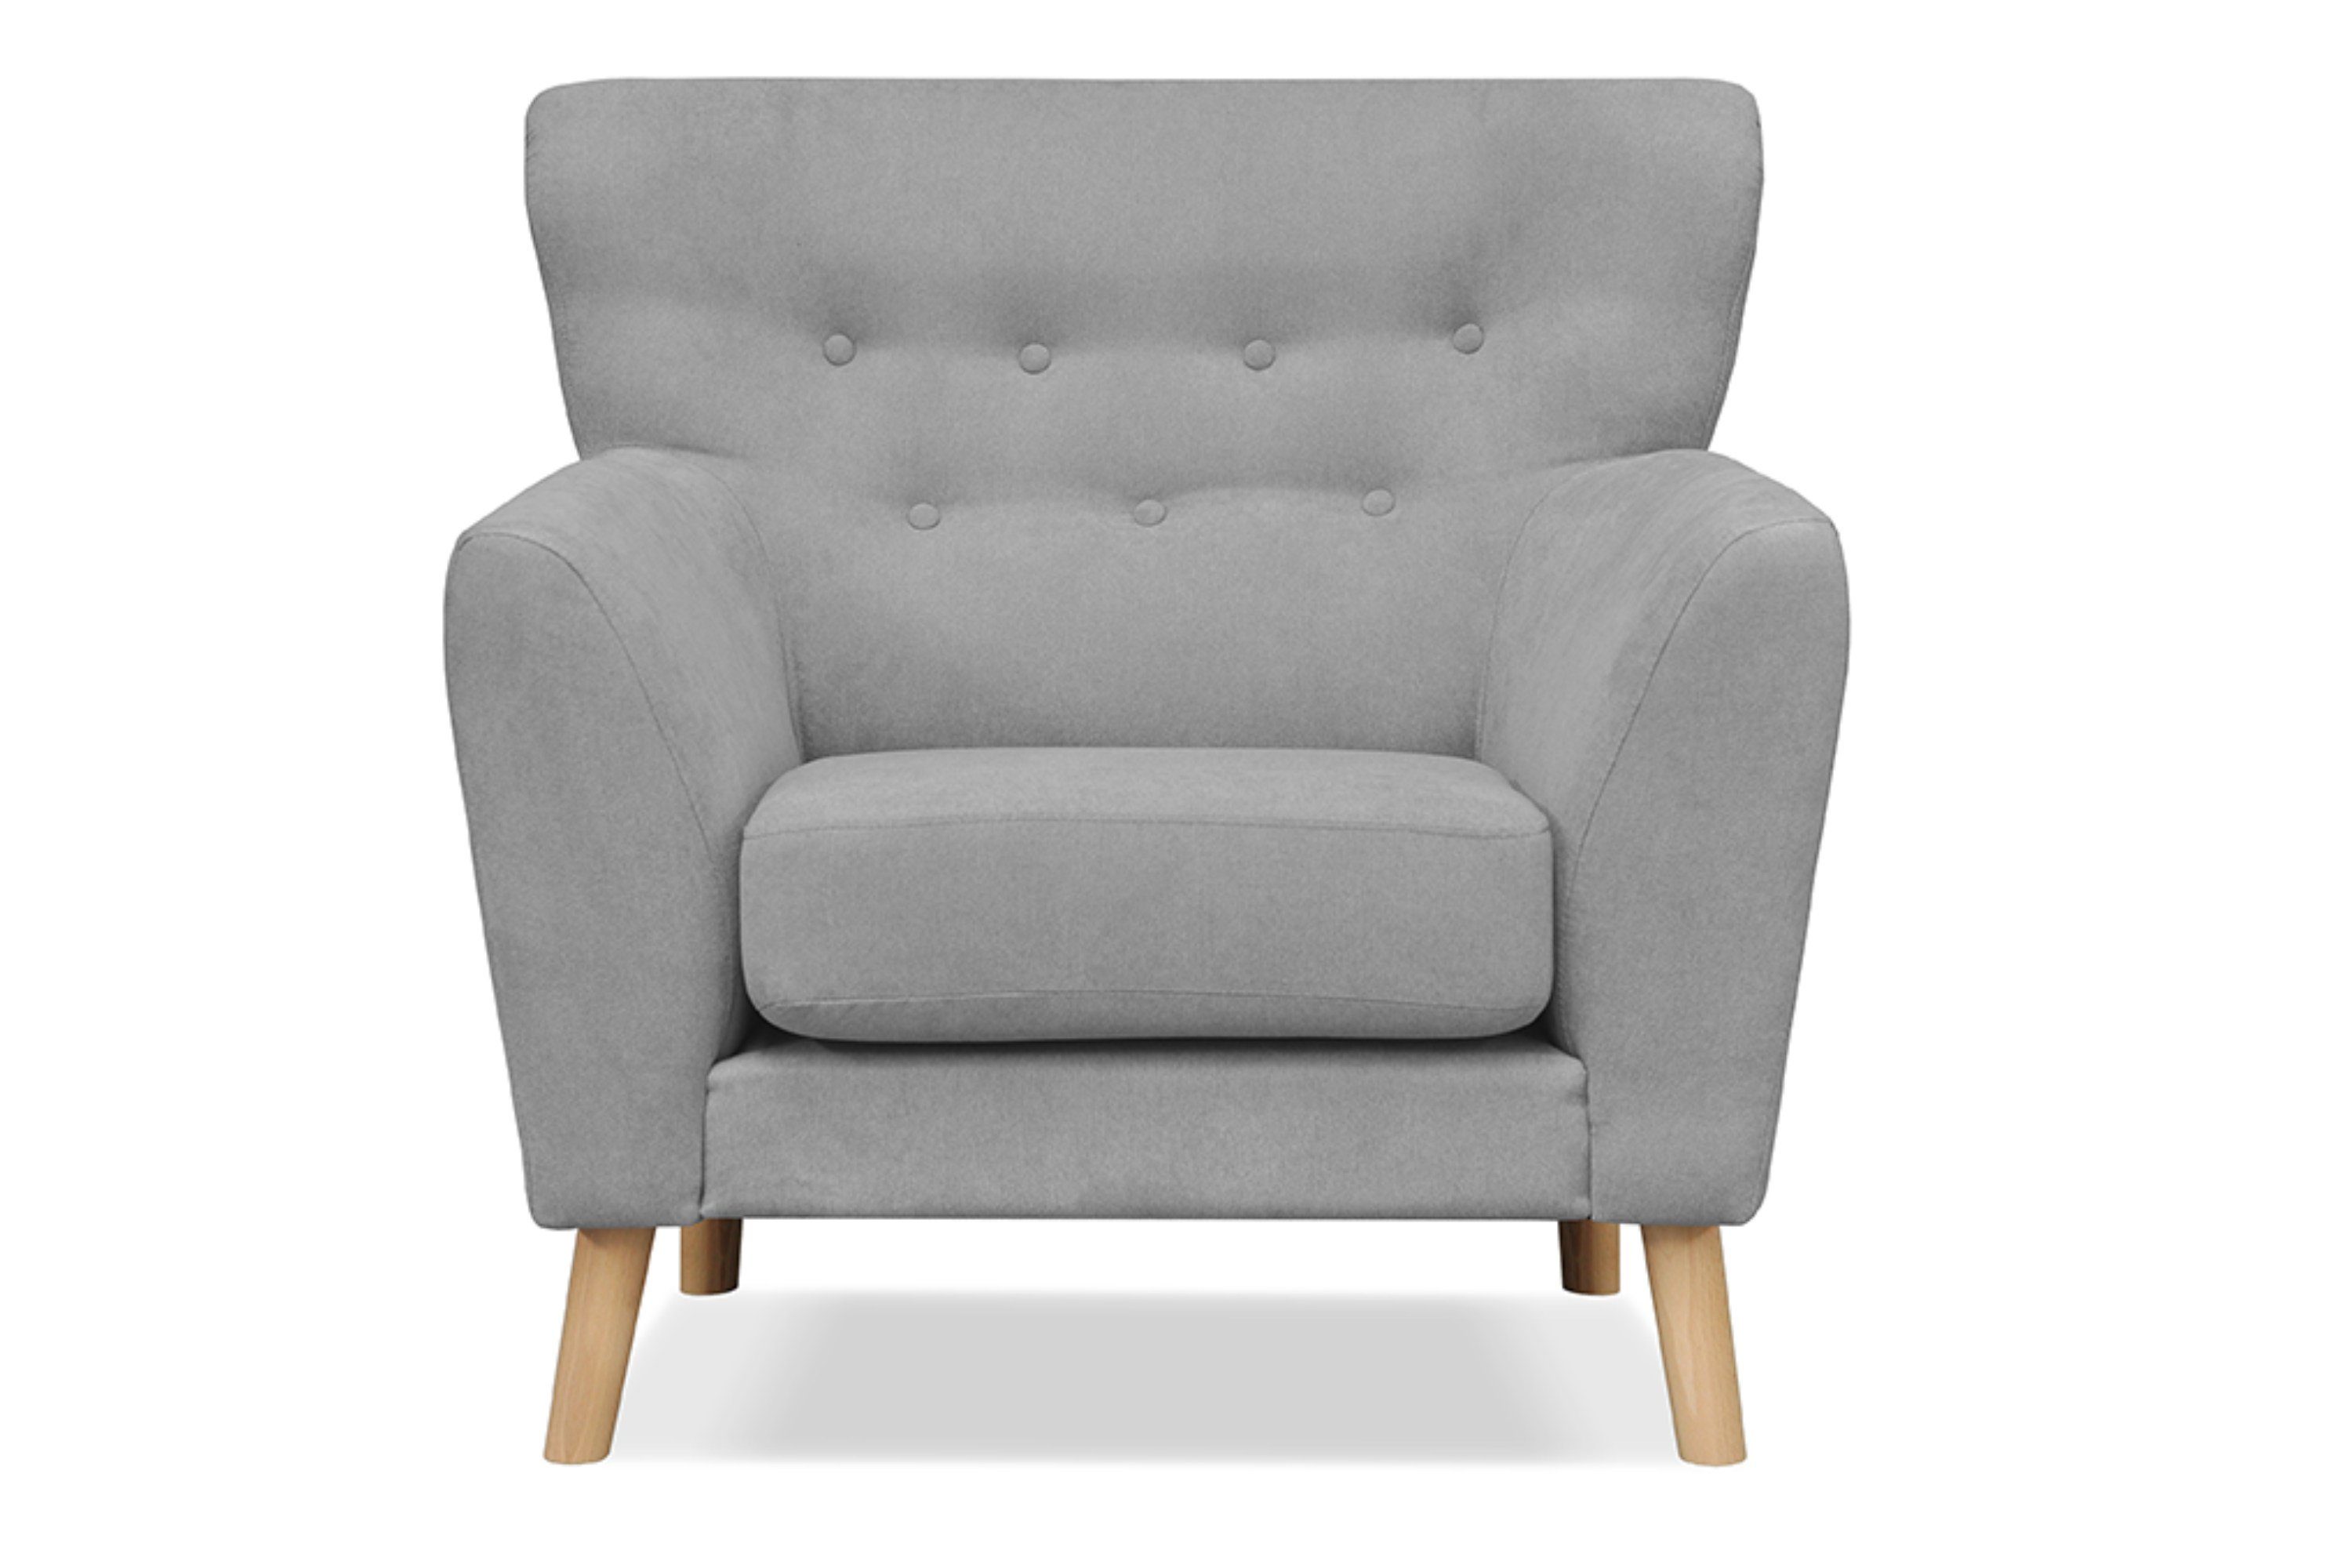 Buche, NEBRIS, aus | Skandinavischer Sessel Konsimo Holzbeinen grau grau auf Stil